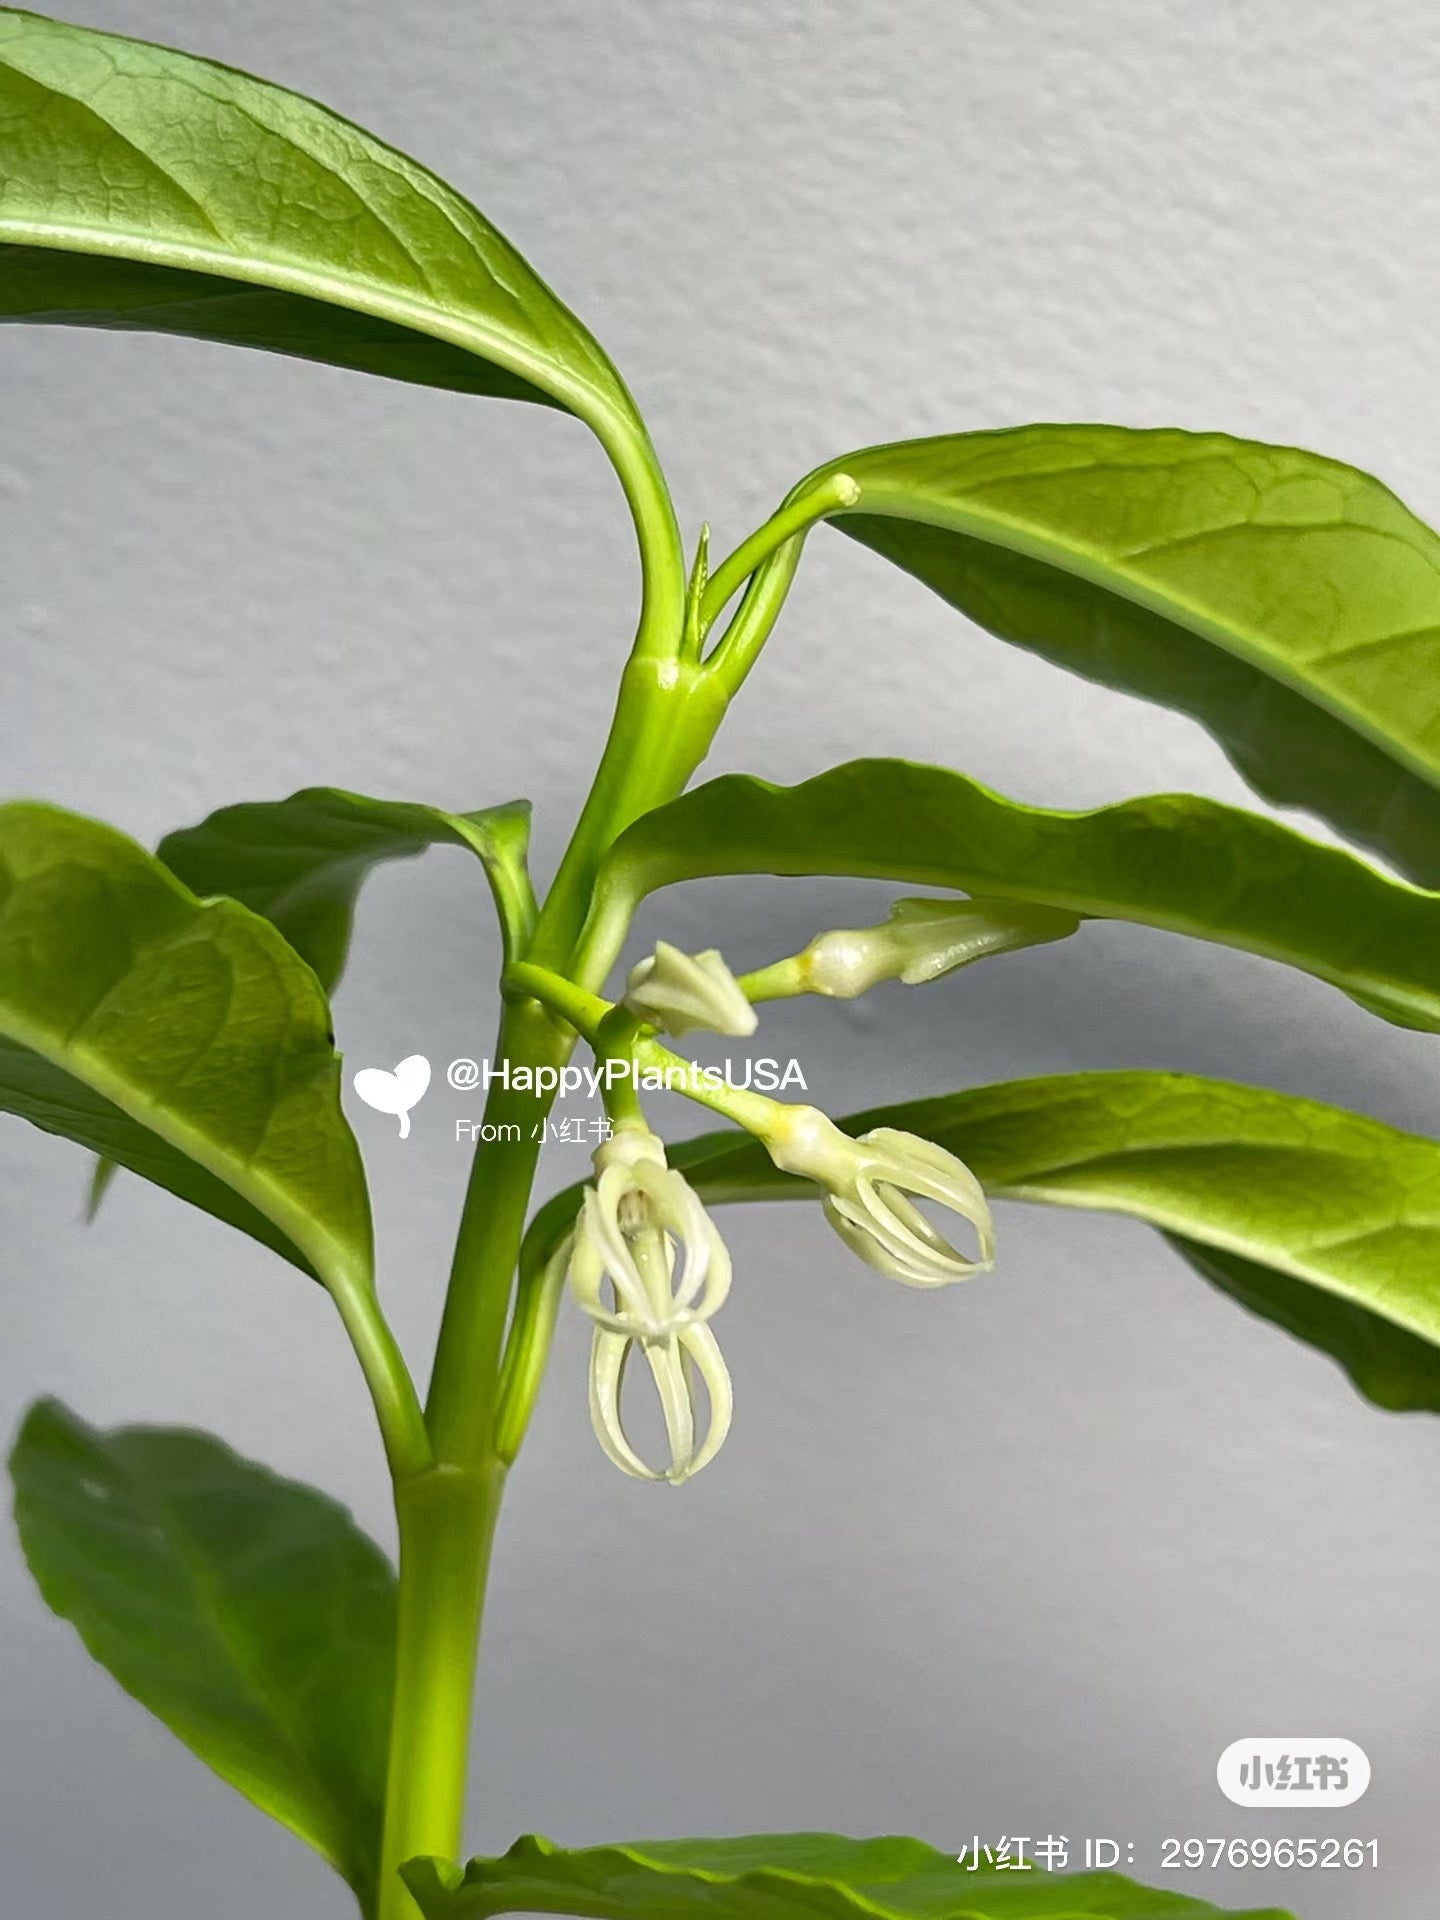 Hoya Decipulae, special flowers